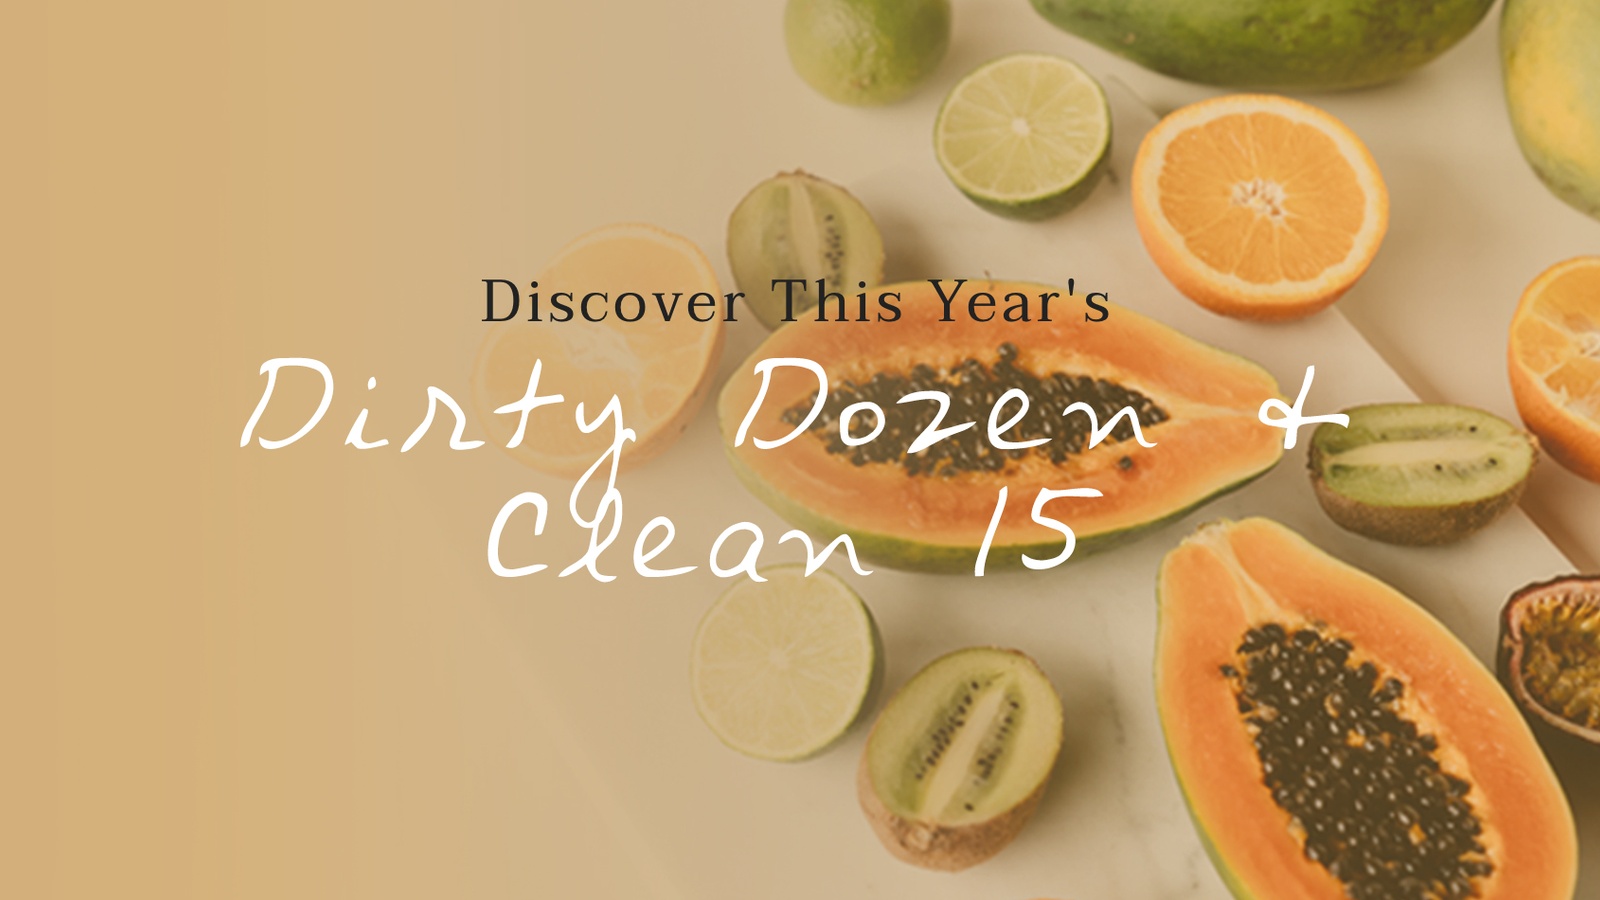 New Report: 2021 Dirty Dozen & Clean 15